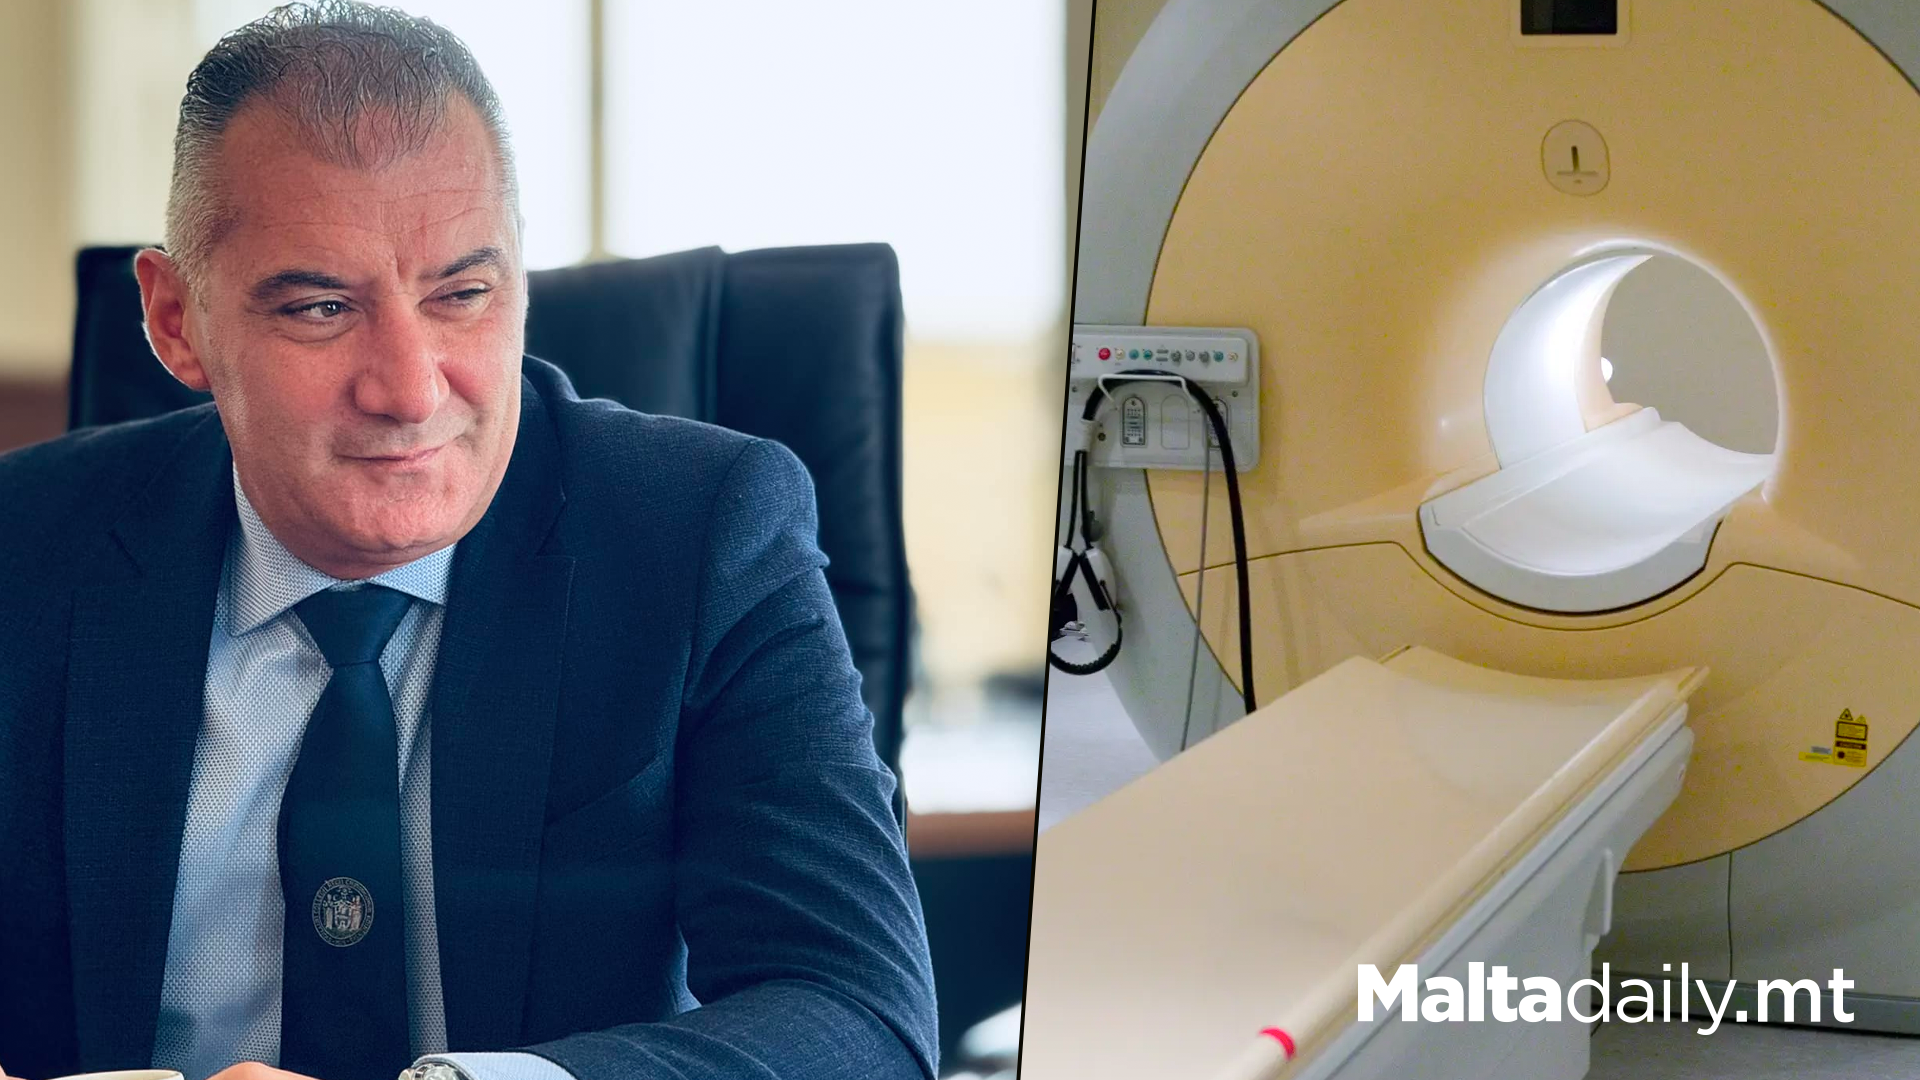 €2 Million Investment For New MRI Scanner At St Vincent De Paul Day Hospital